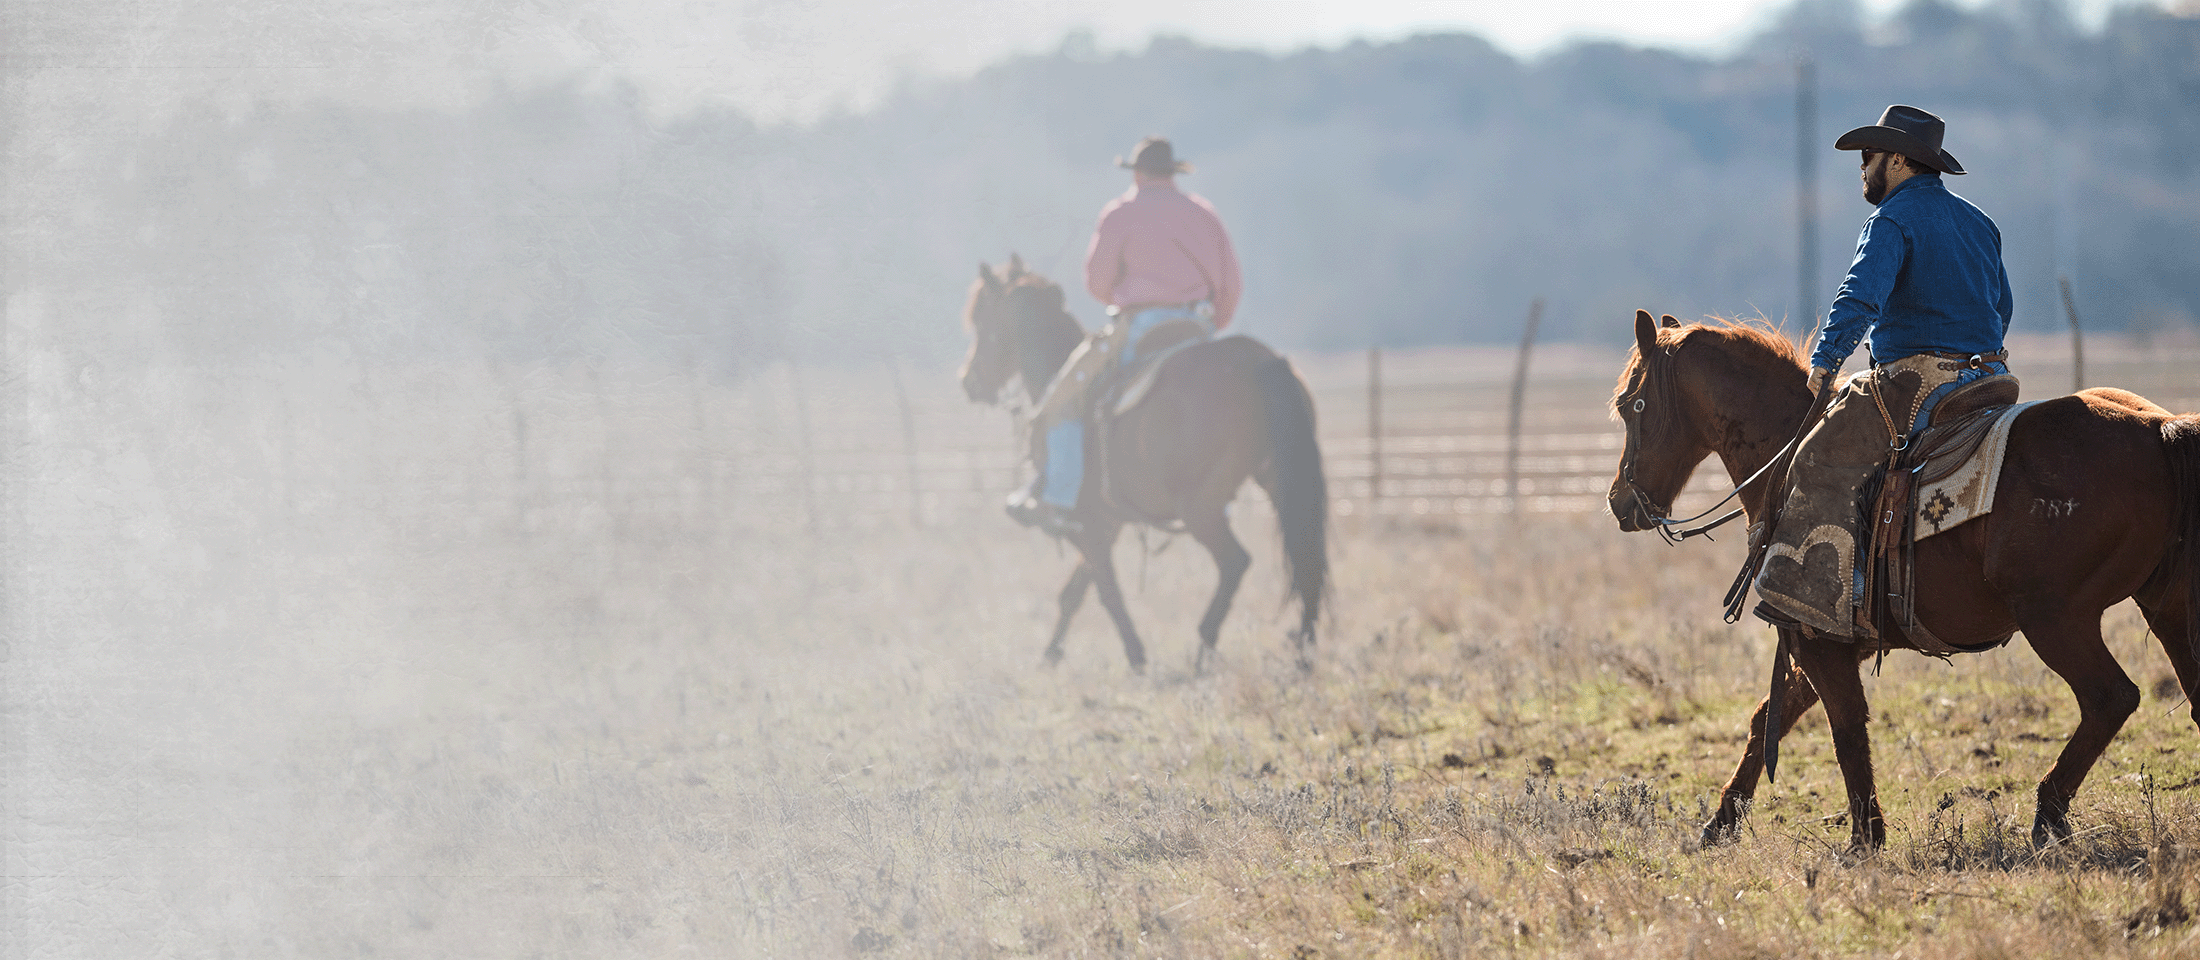 Two men riding on horseback through a pasture.